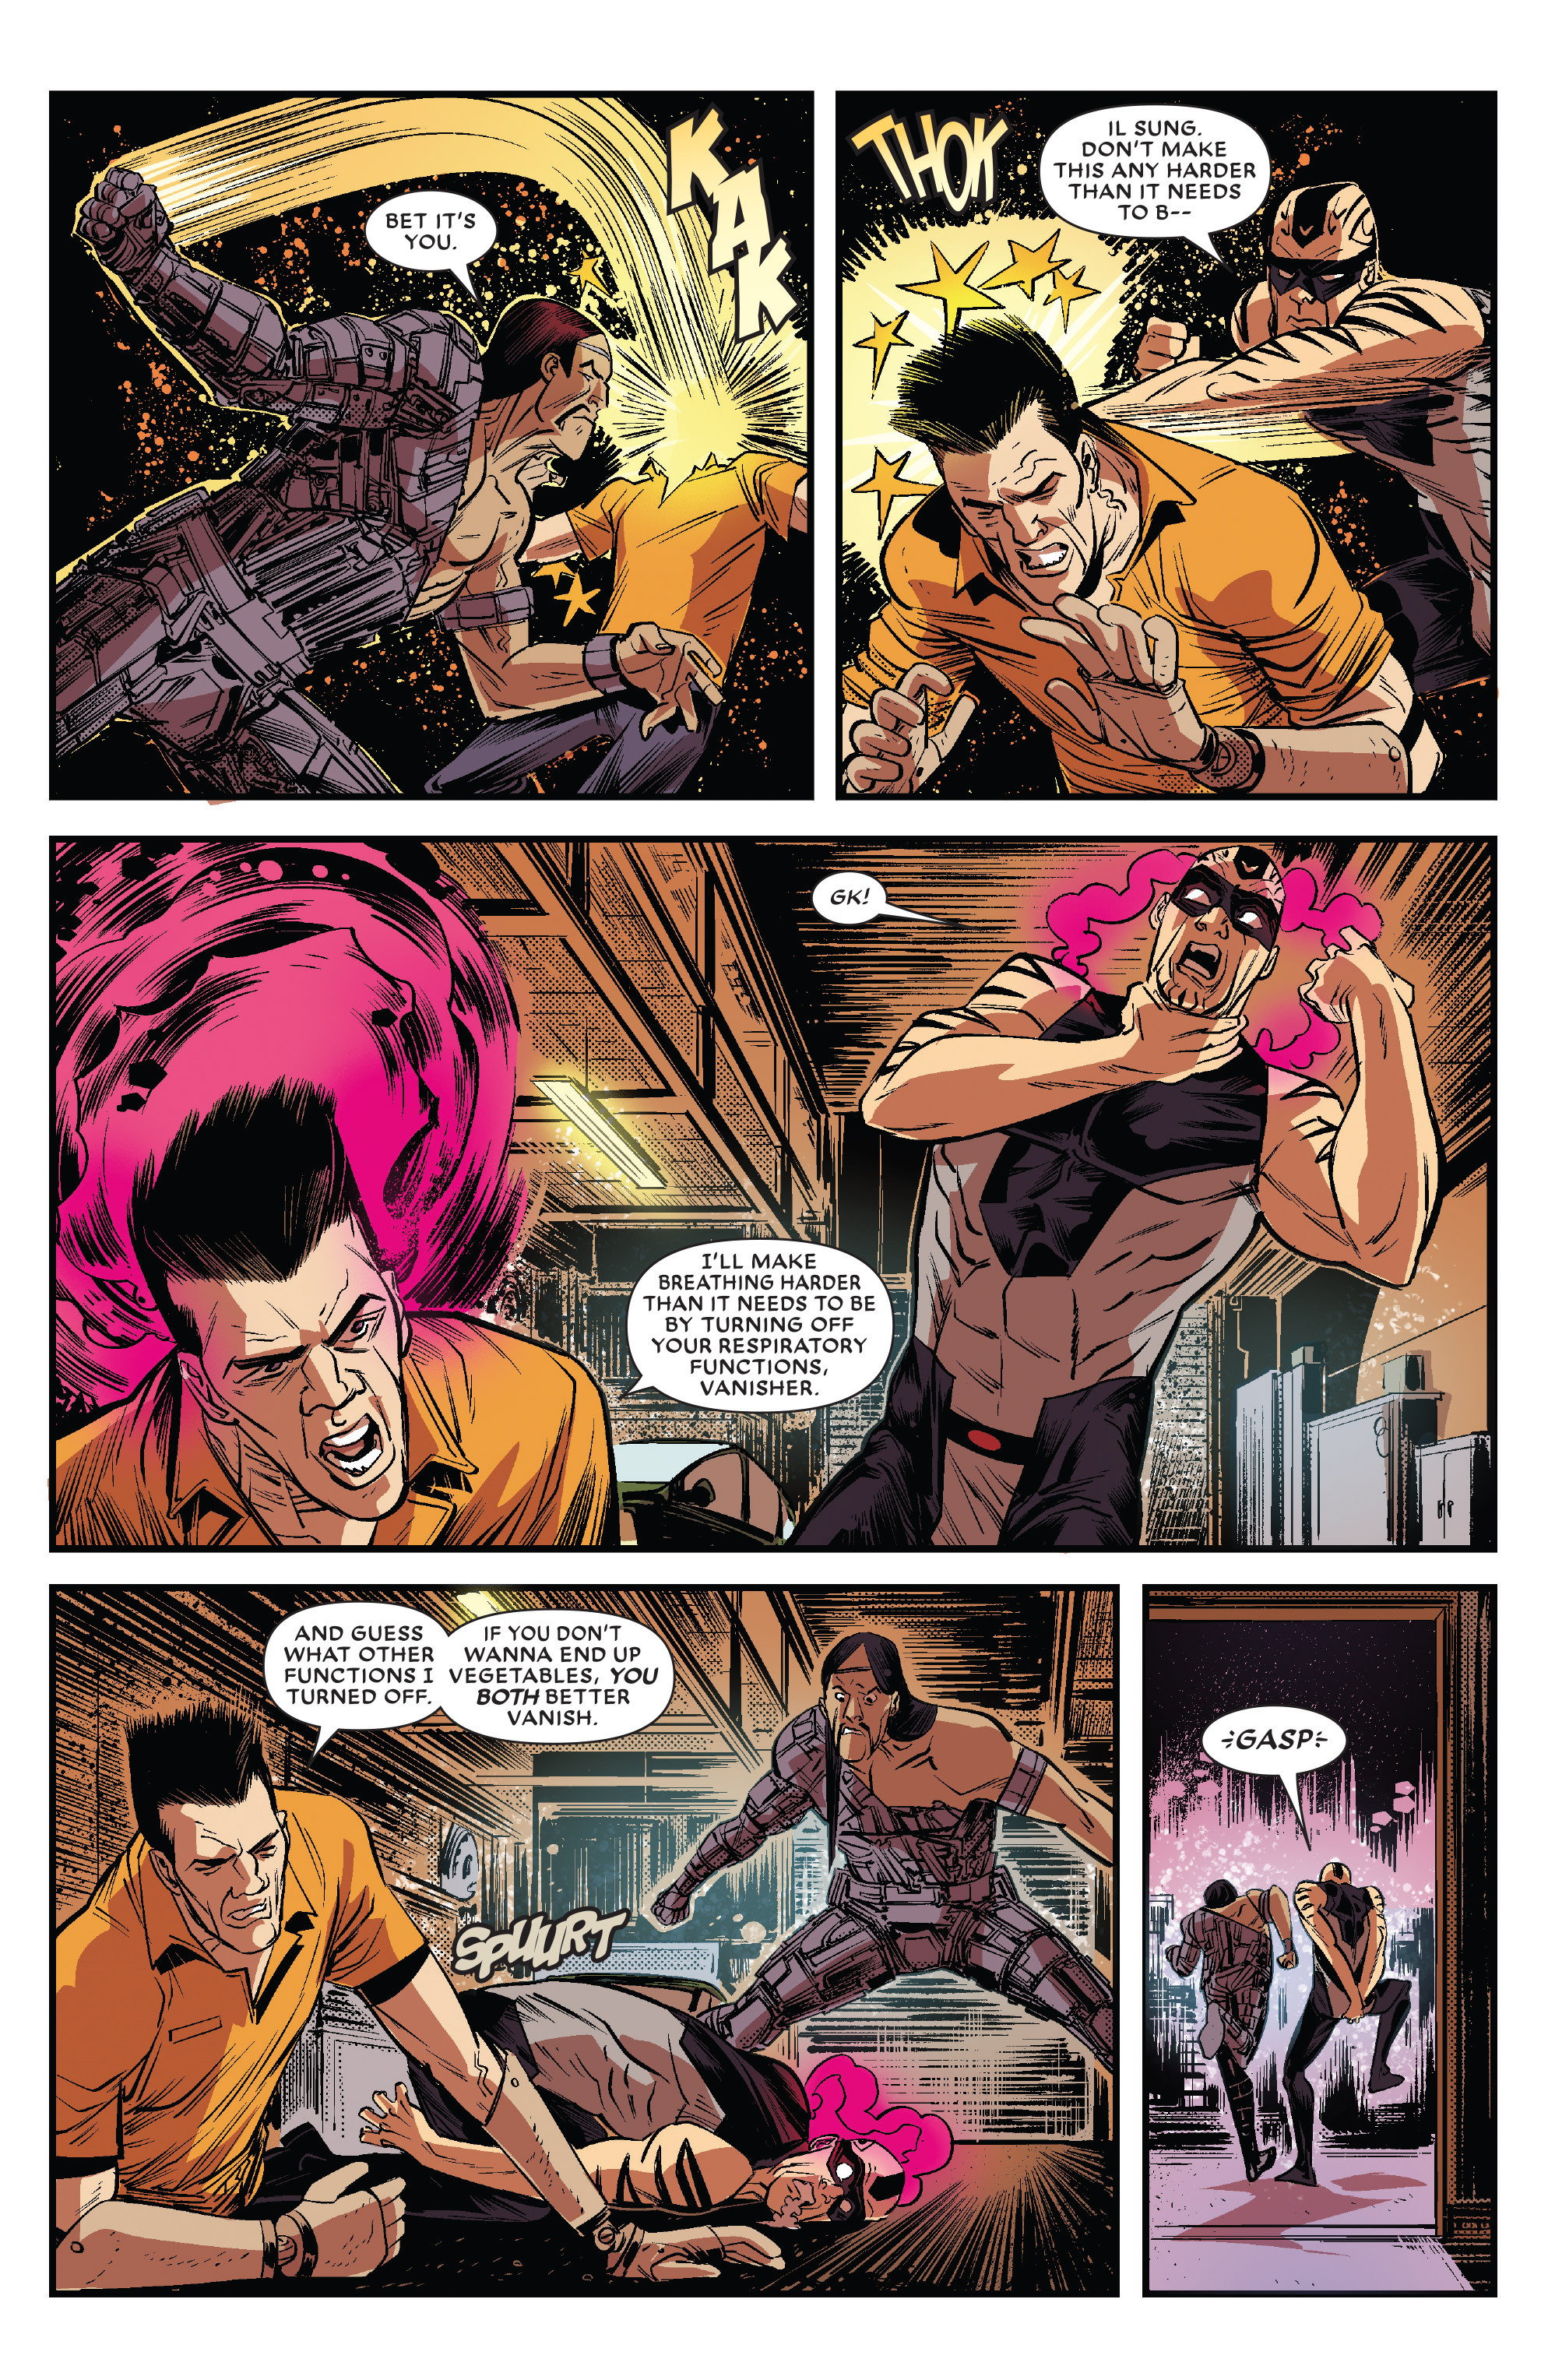 Deadpool V Gambit Issue 4 Viewcomic Reading Comics Online